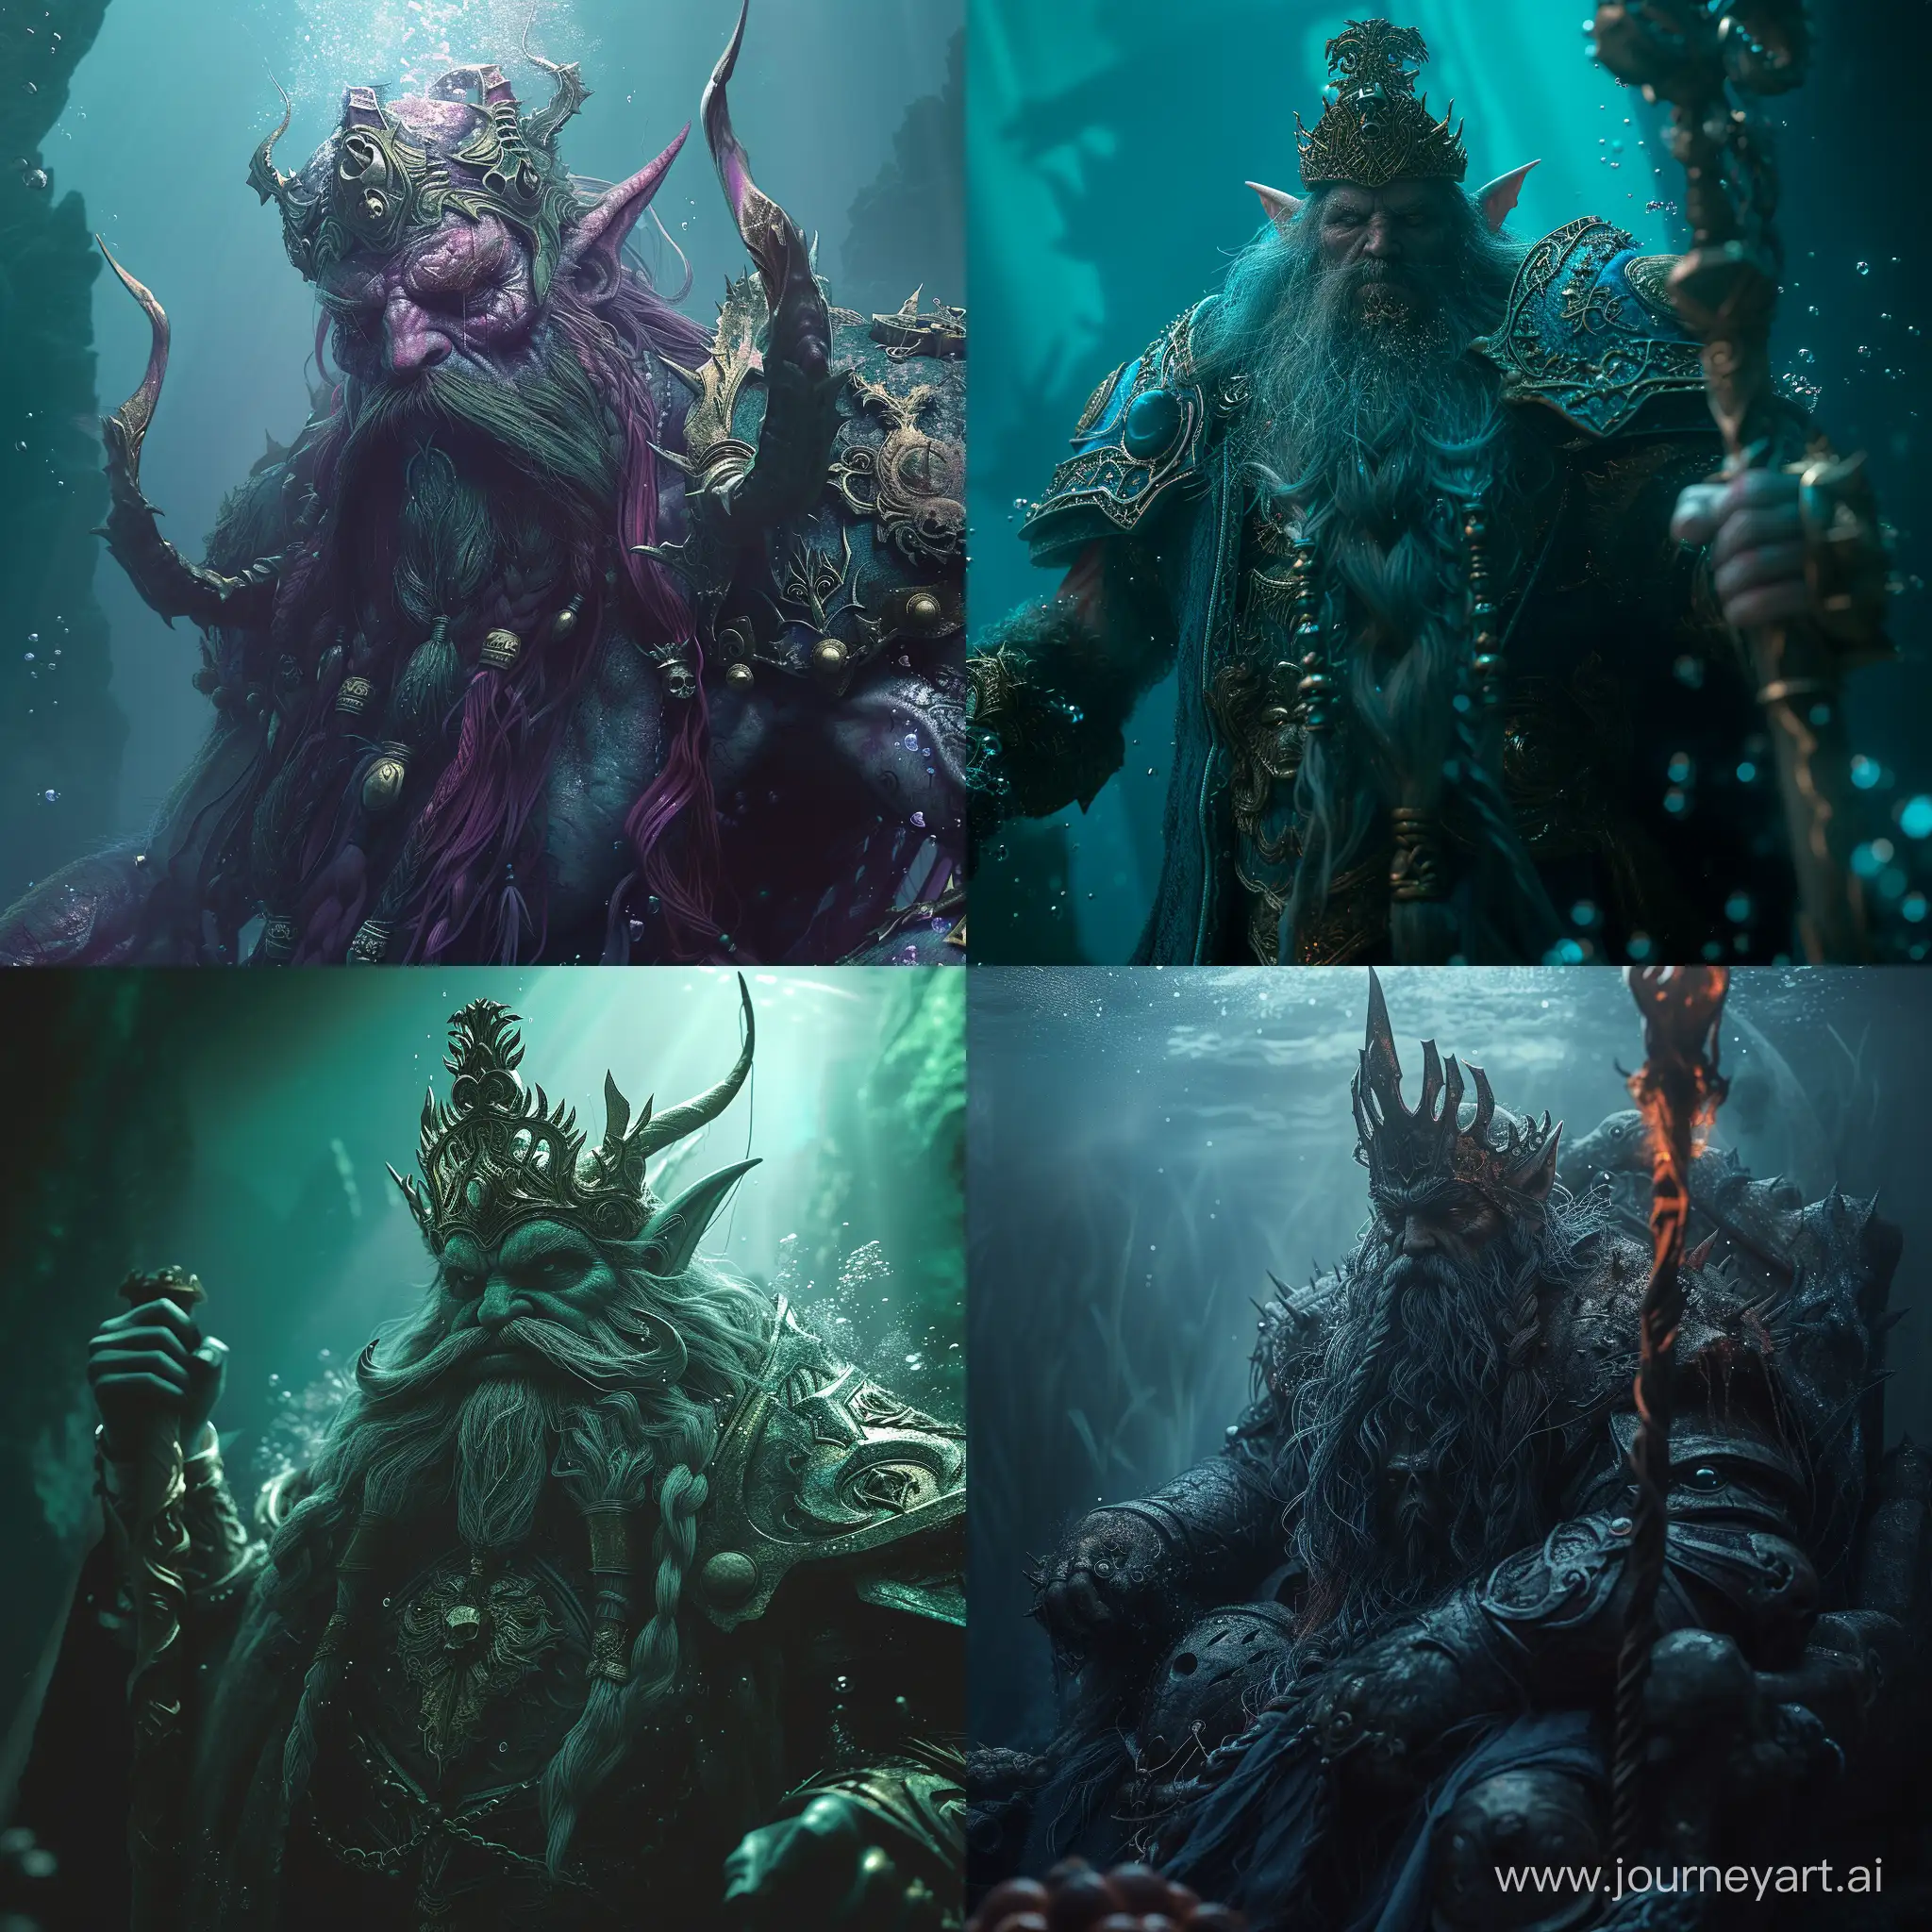 Epic-Underwater-King-HyperRealistic-World-of-Warcraft-Scene